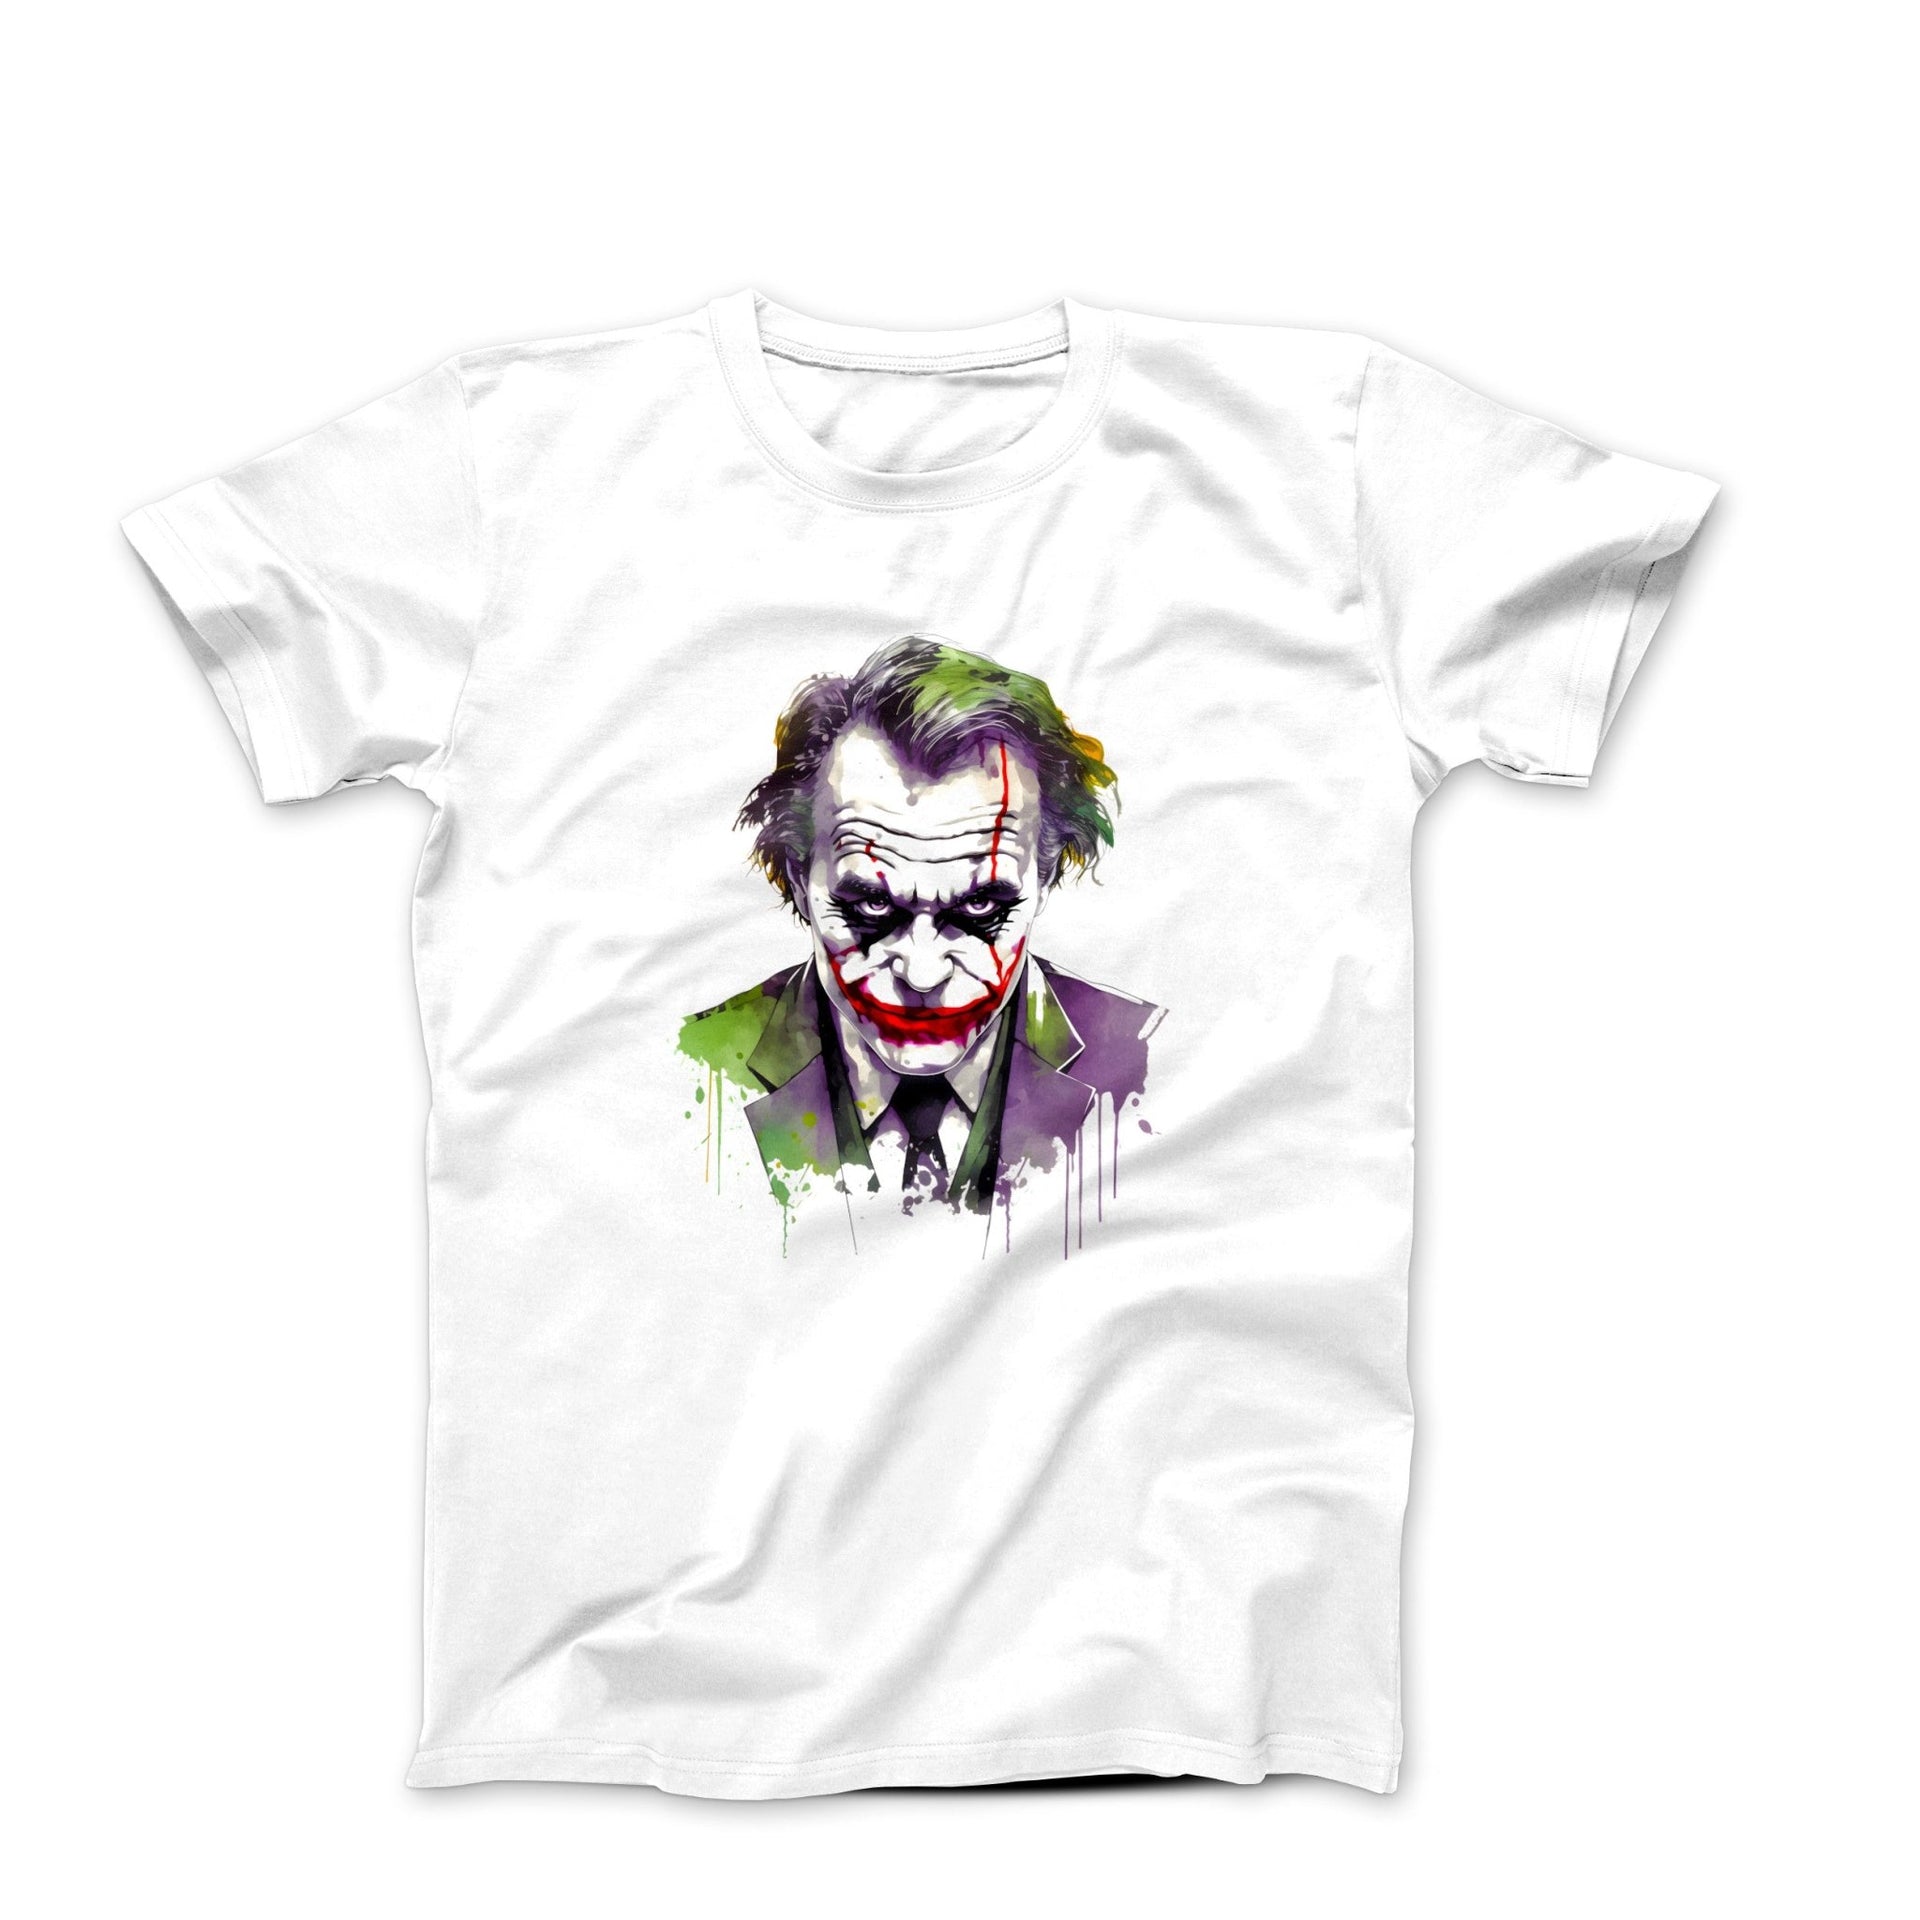 The Clown Prince of Crime Illustration T-shirt - Clothing - Harvey Ltd